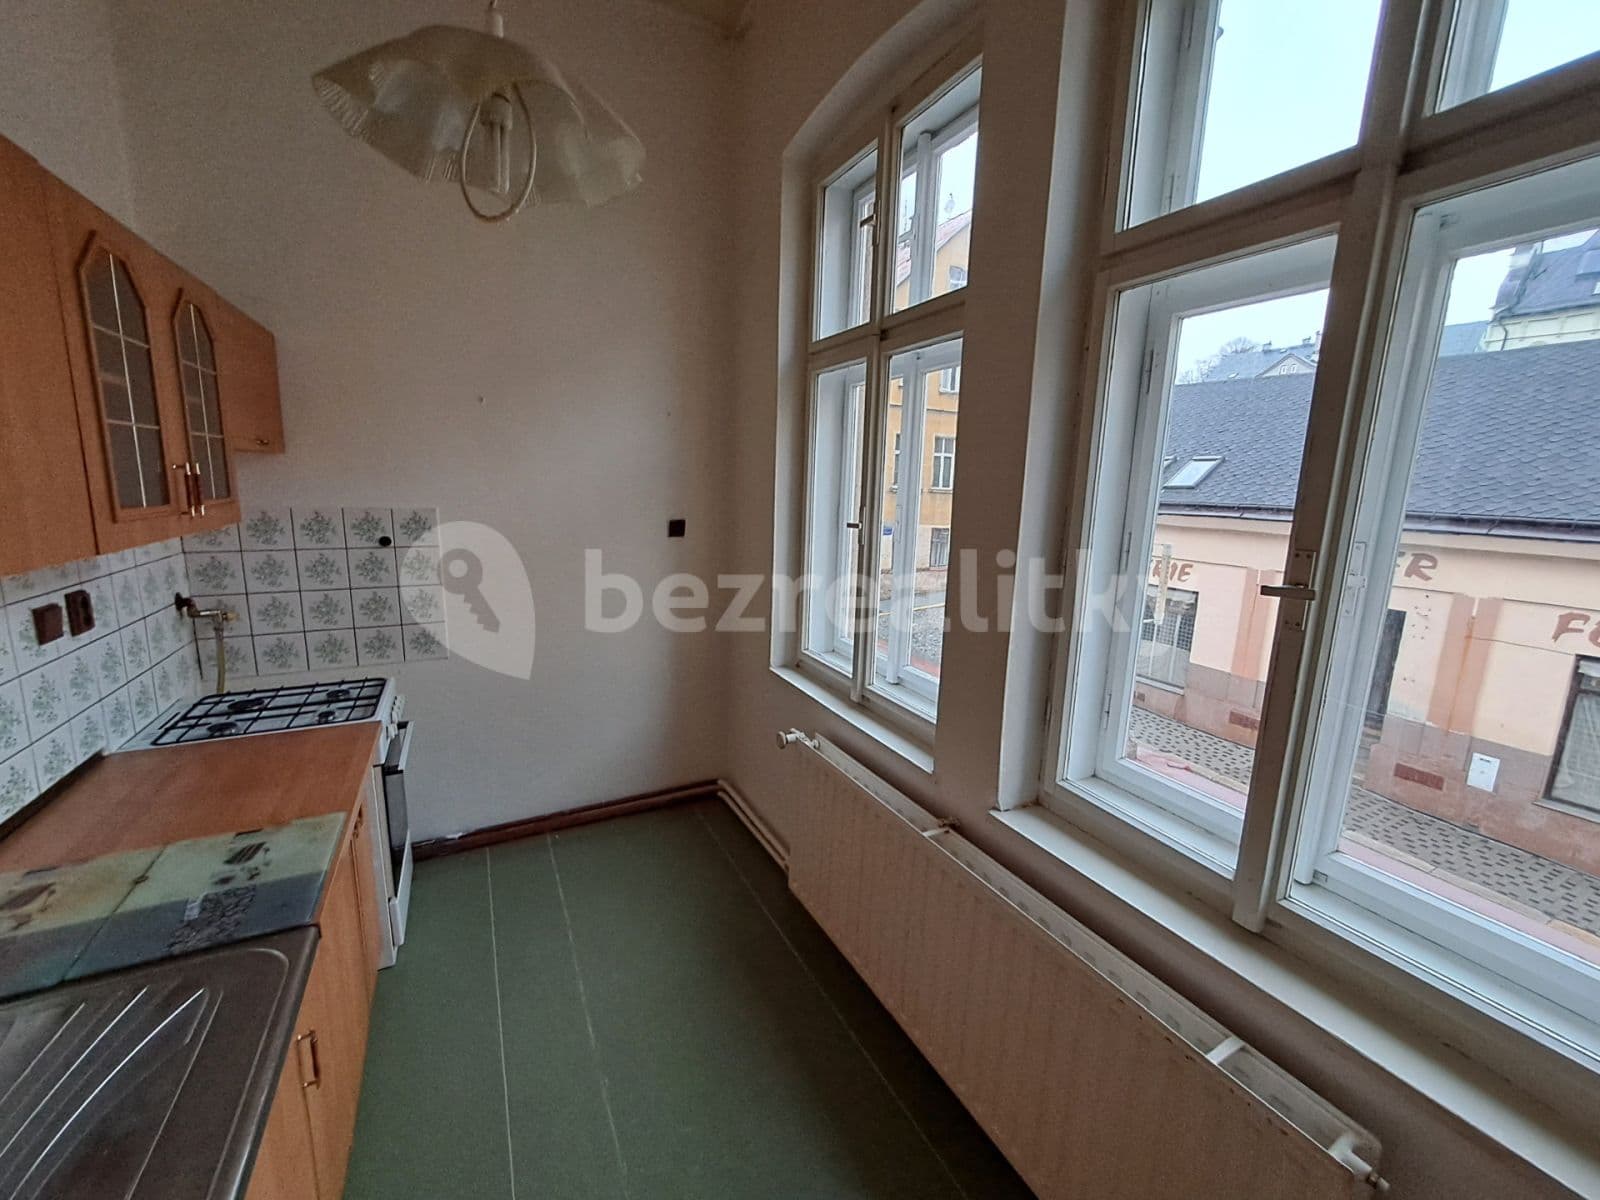 Predaj bytu 3-izbový 91 m², Liberecká, Jablonec nad Nisou, Liberecký kraj